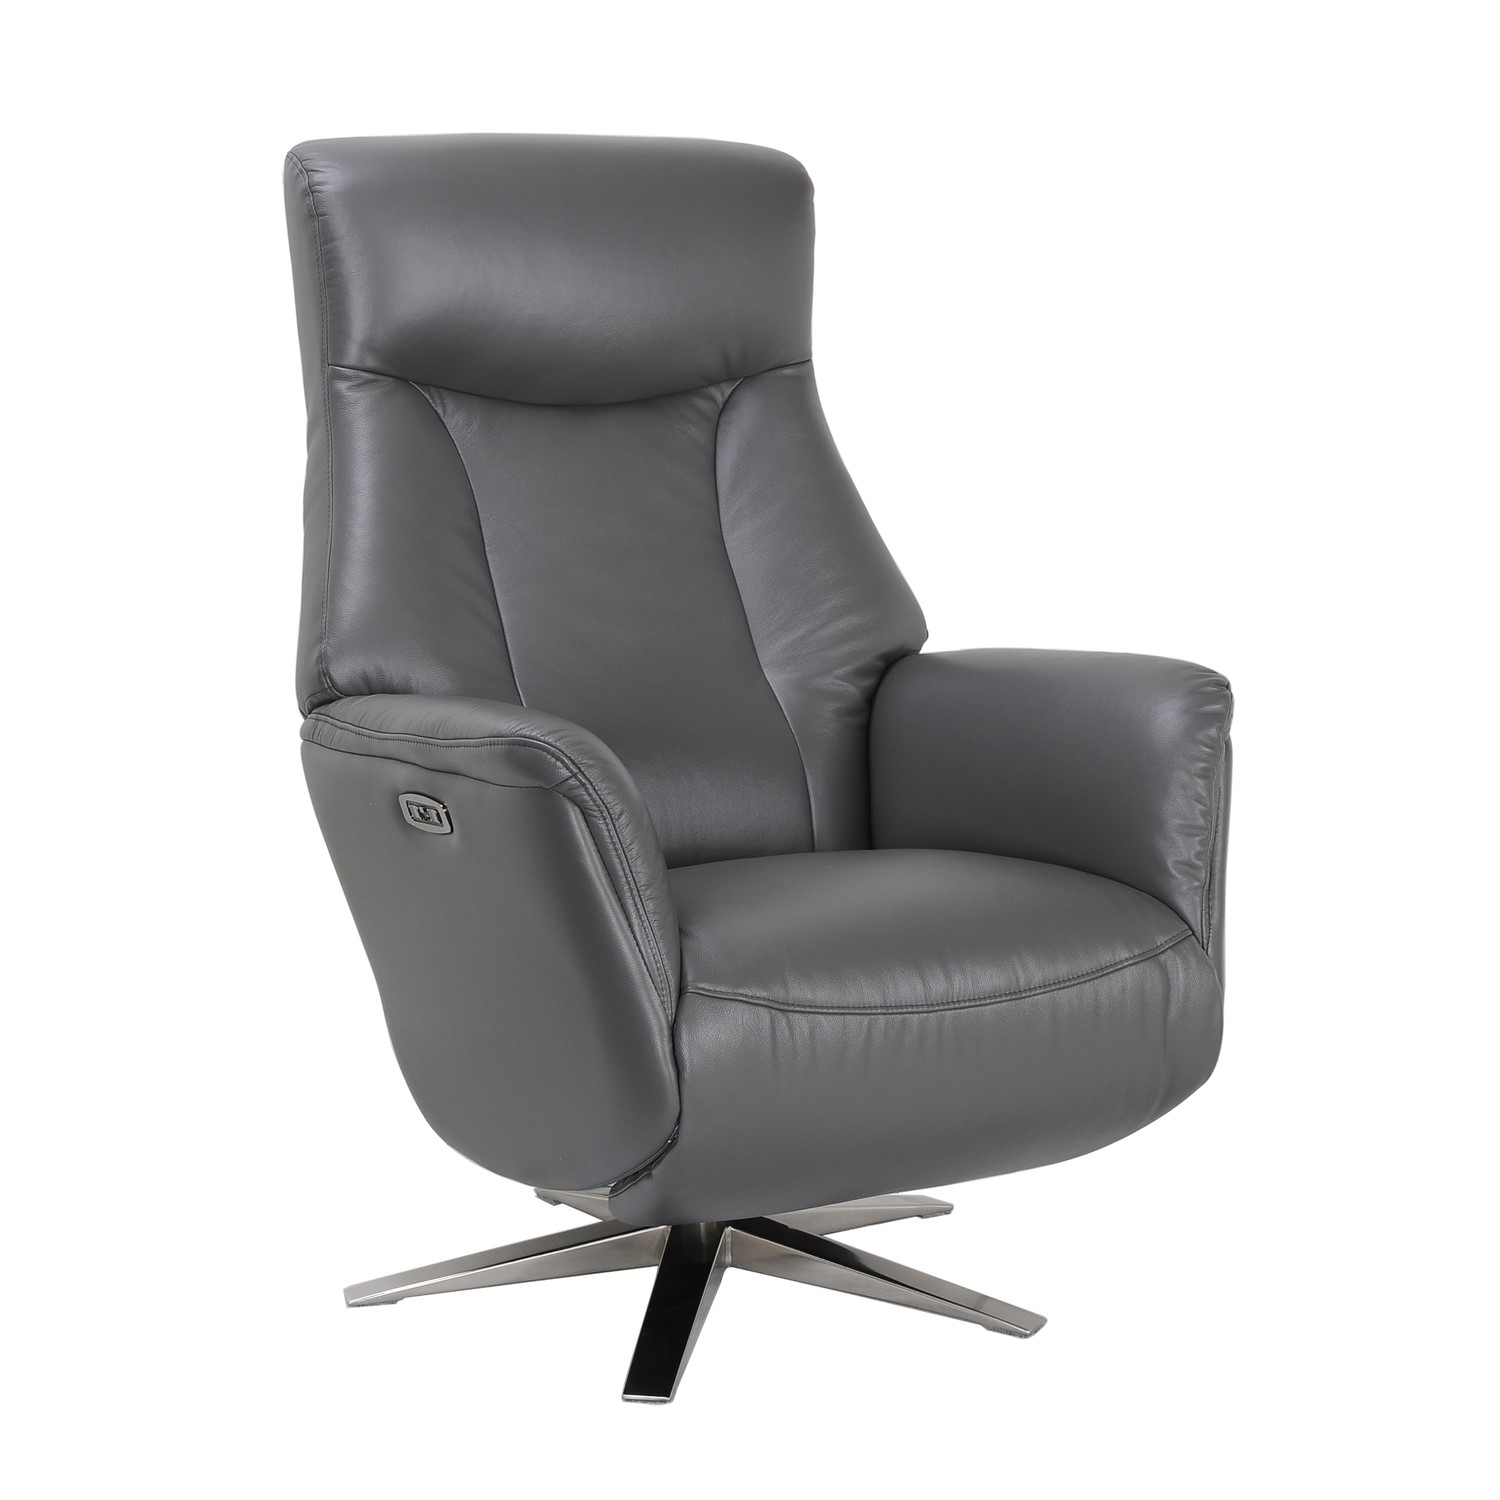 Photo of Dark grey leather swivel recliner armchair - houston